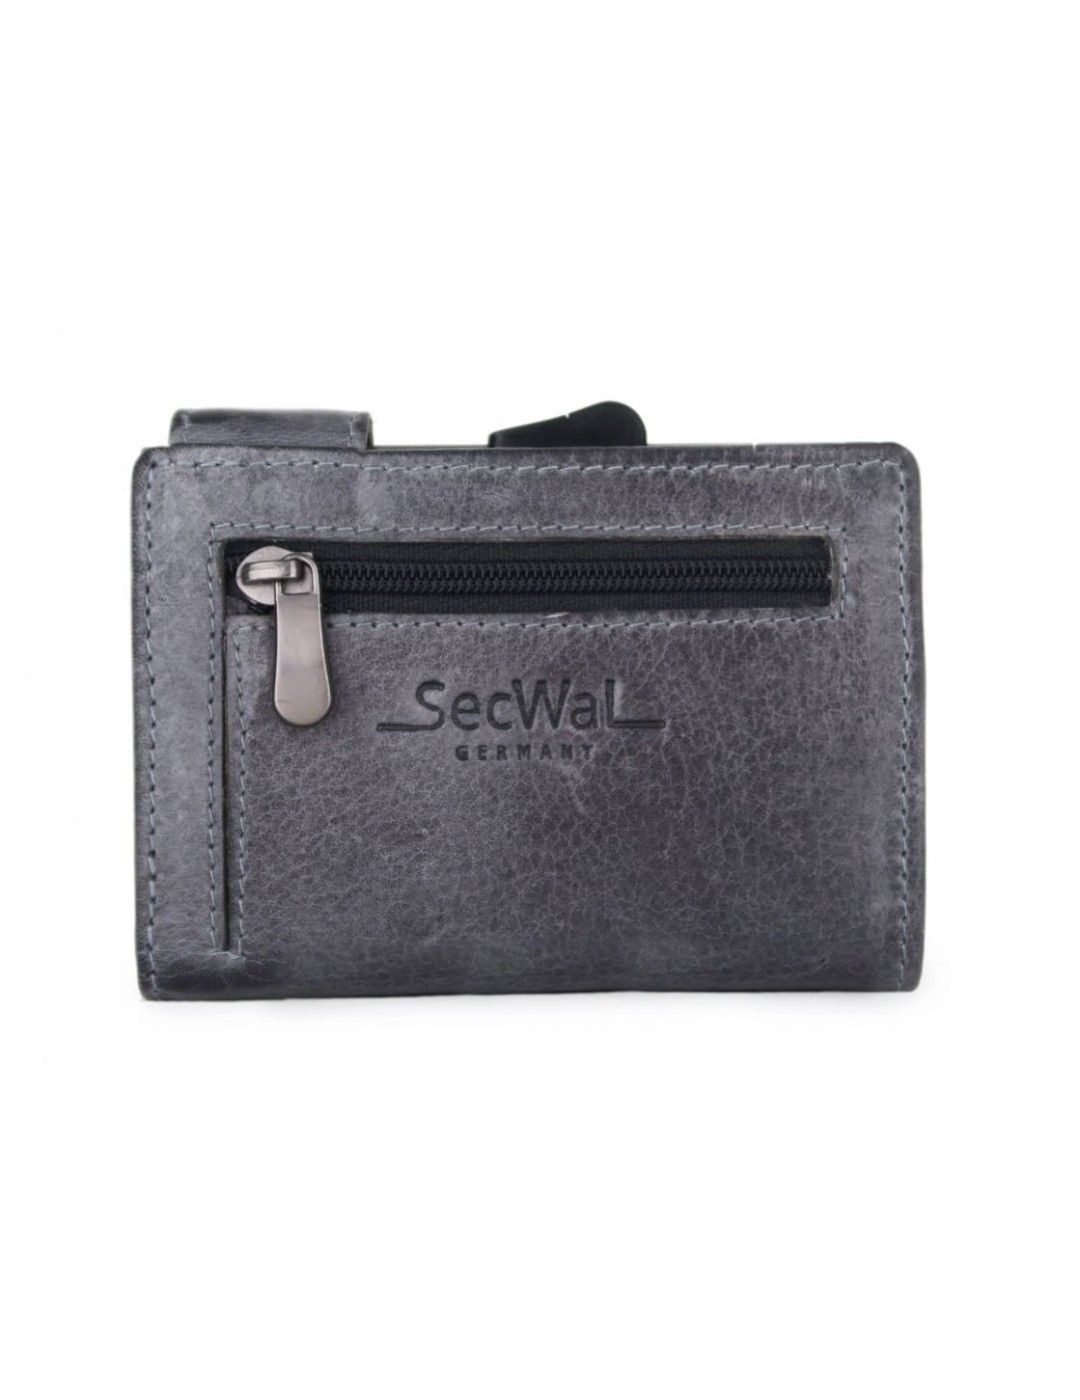 Porte-cartes SecWal RV Leather gris vintage